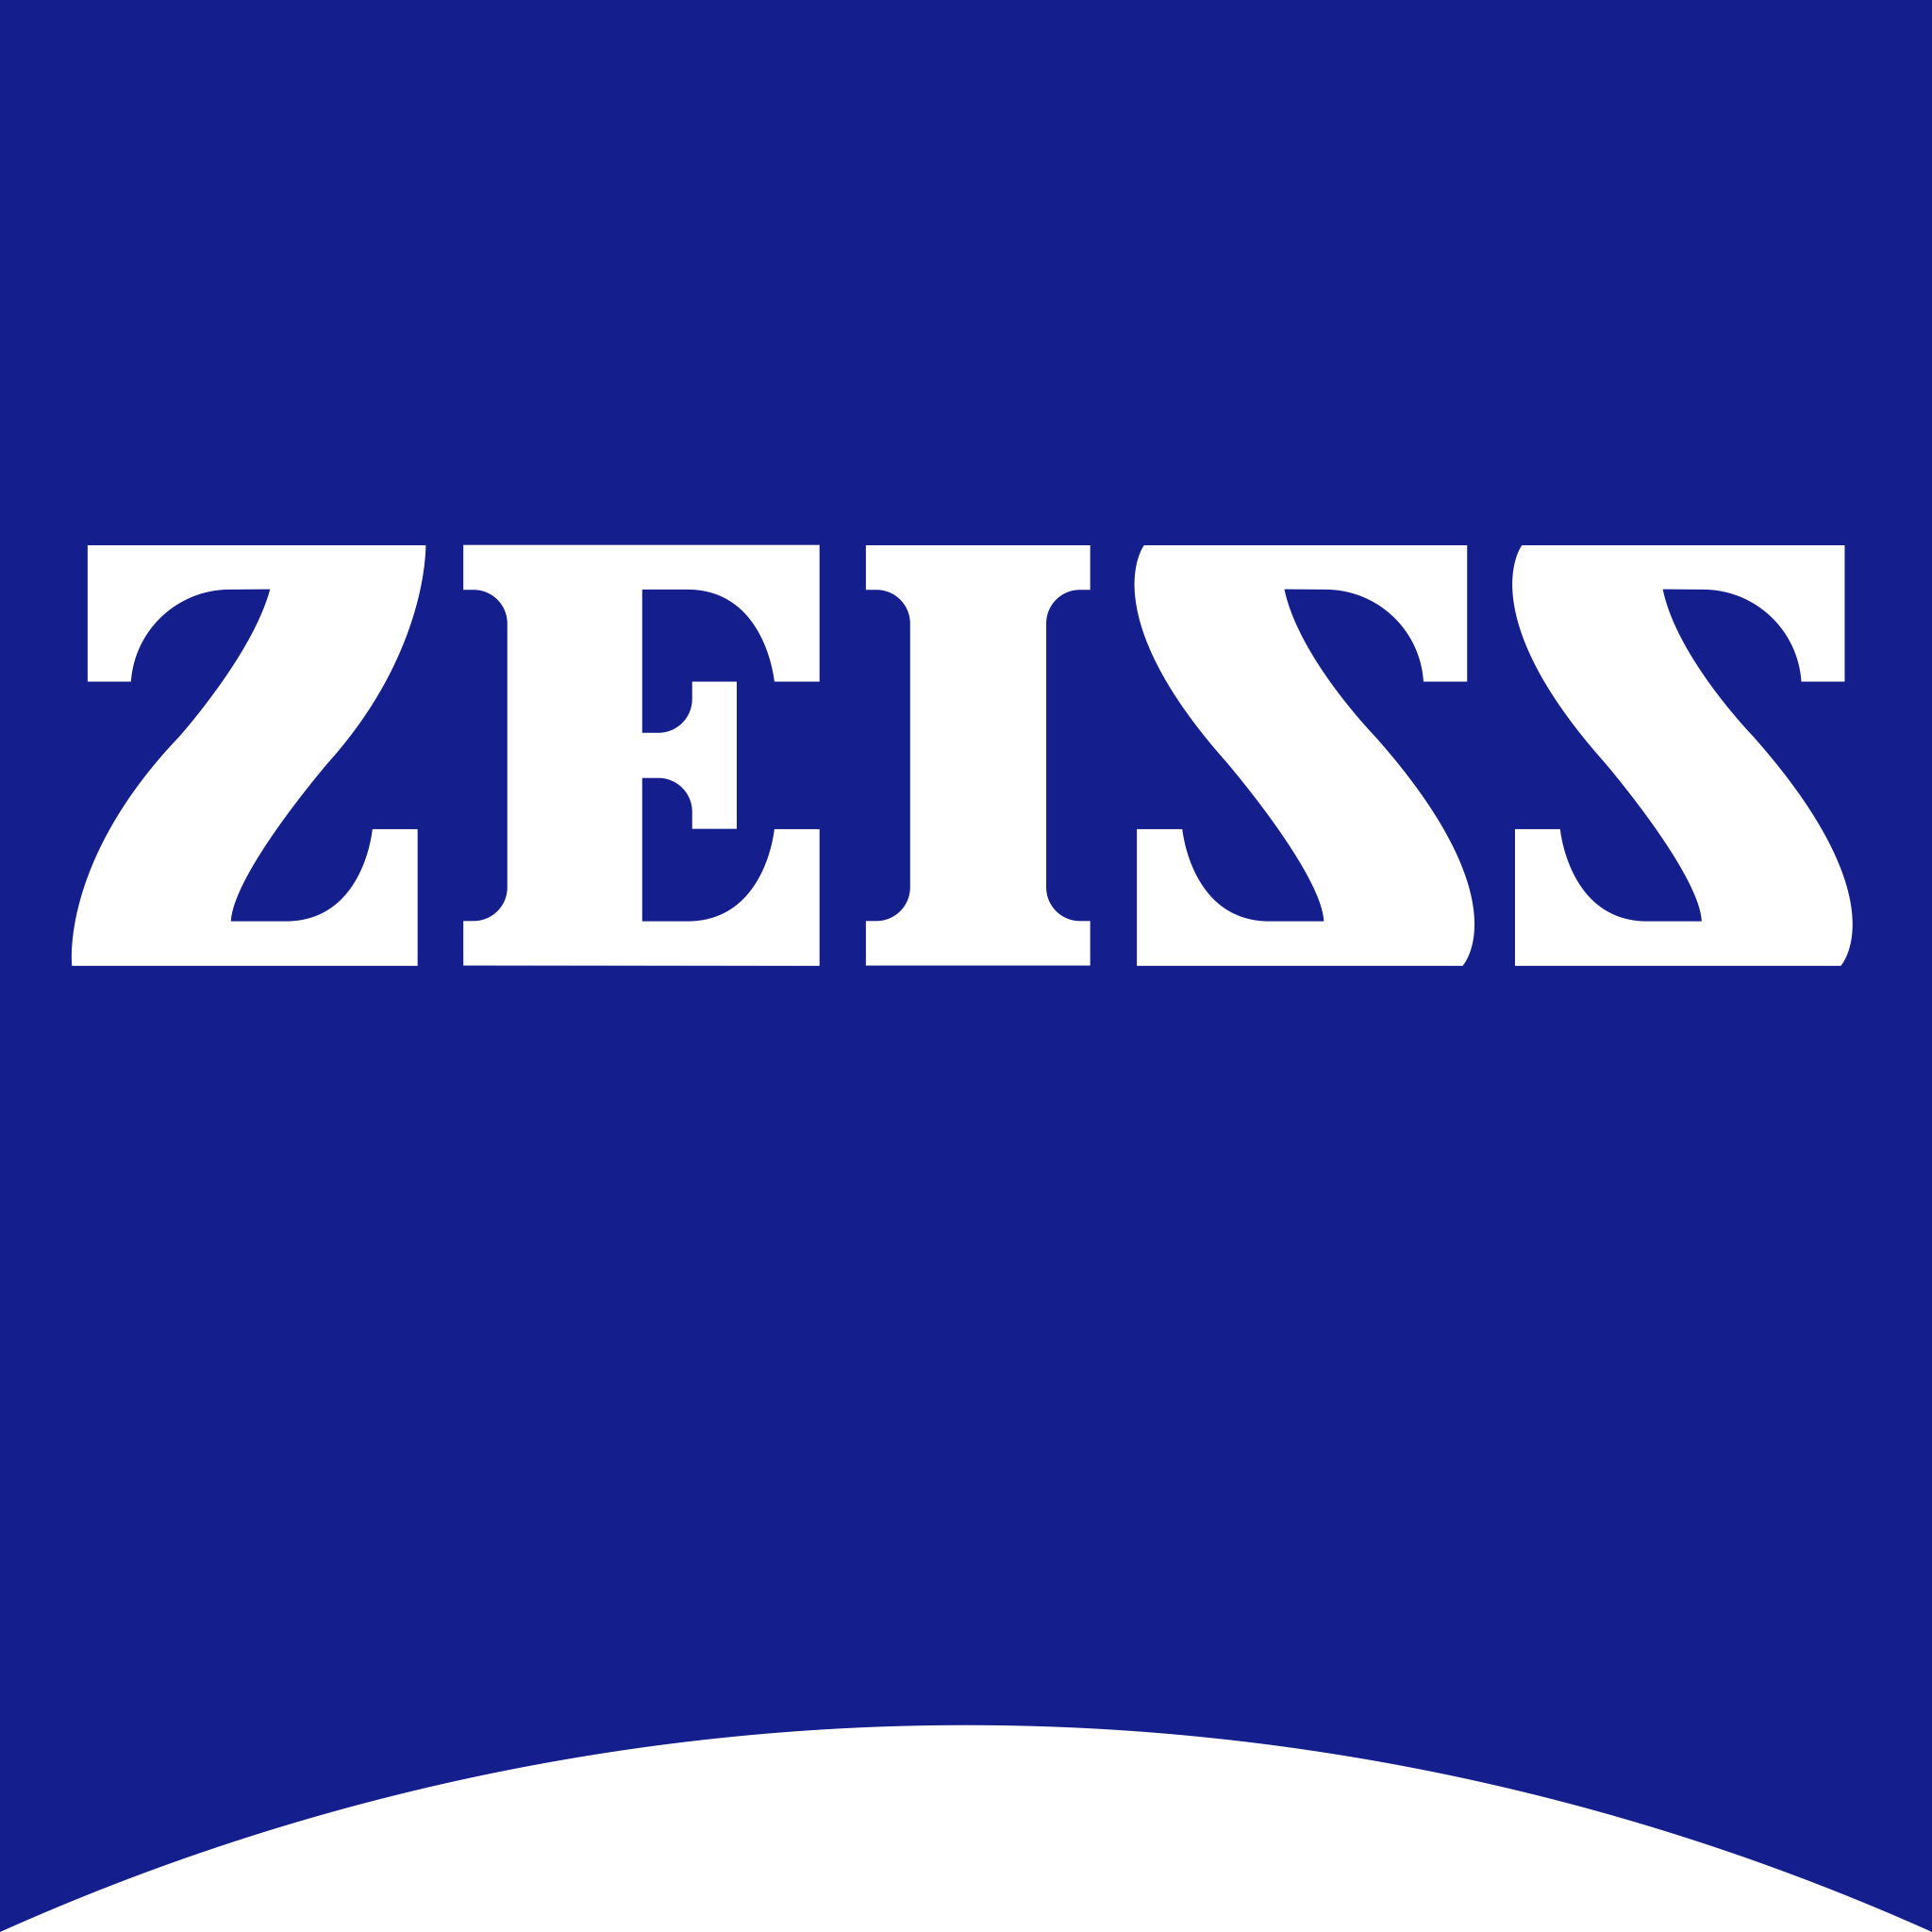 ZEISS Logo - PNG e Vetor - Download de Logo